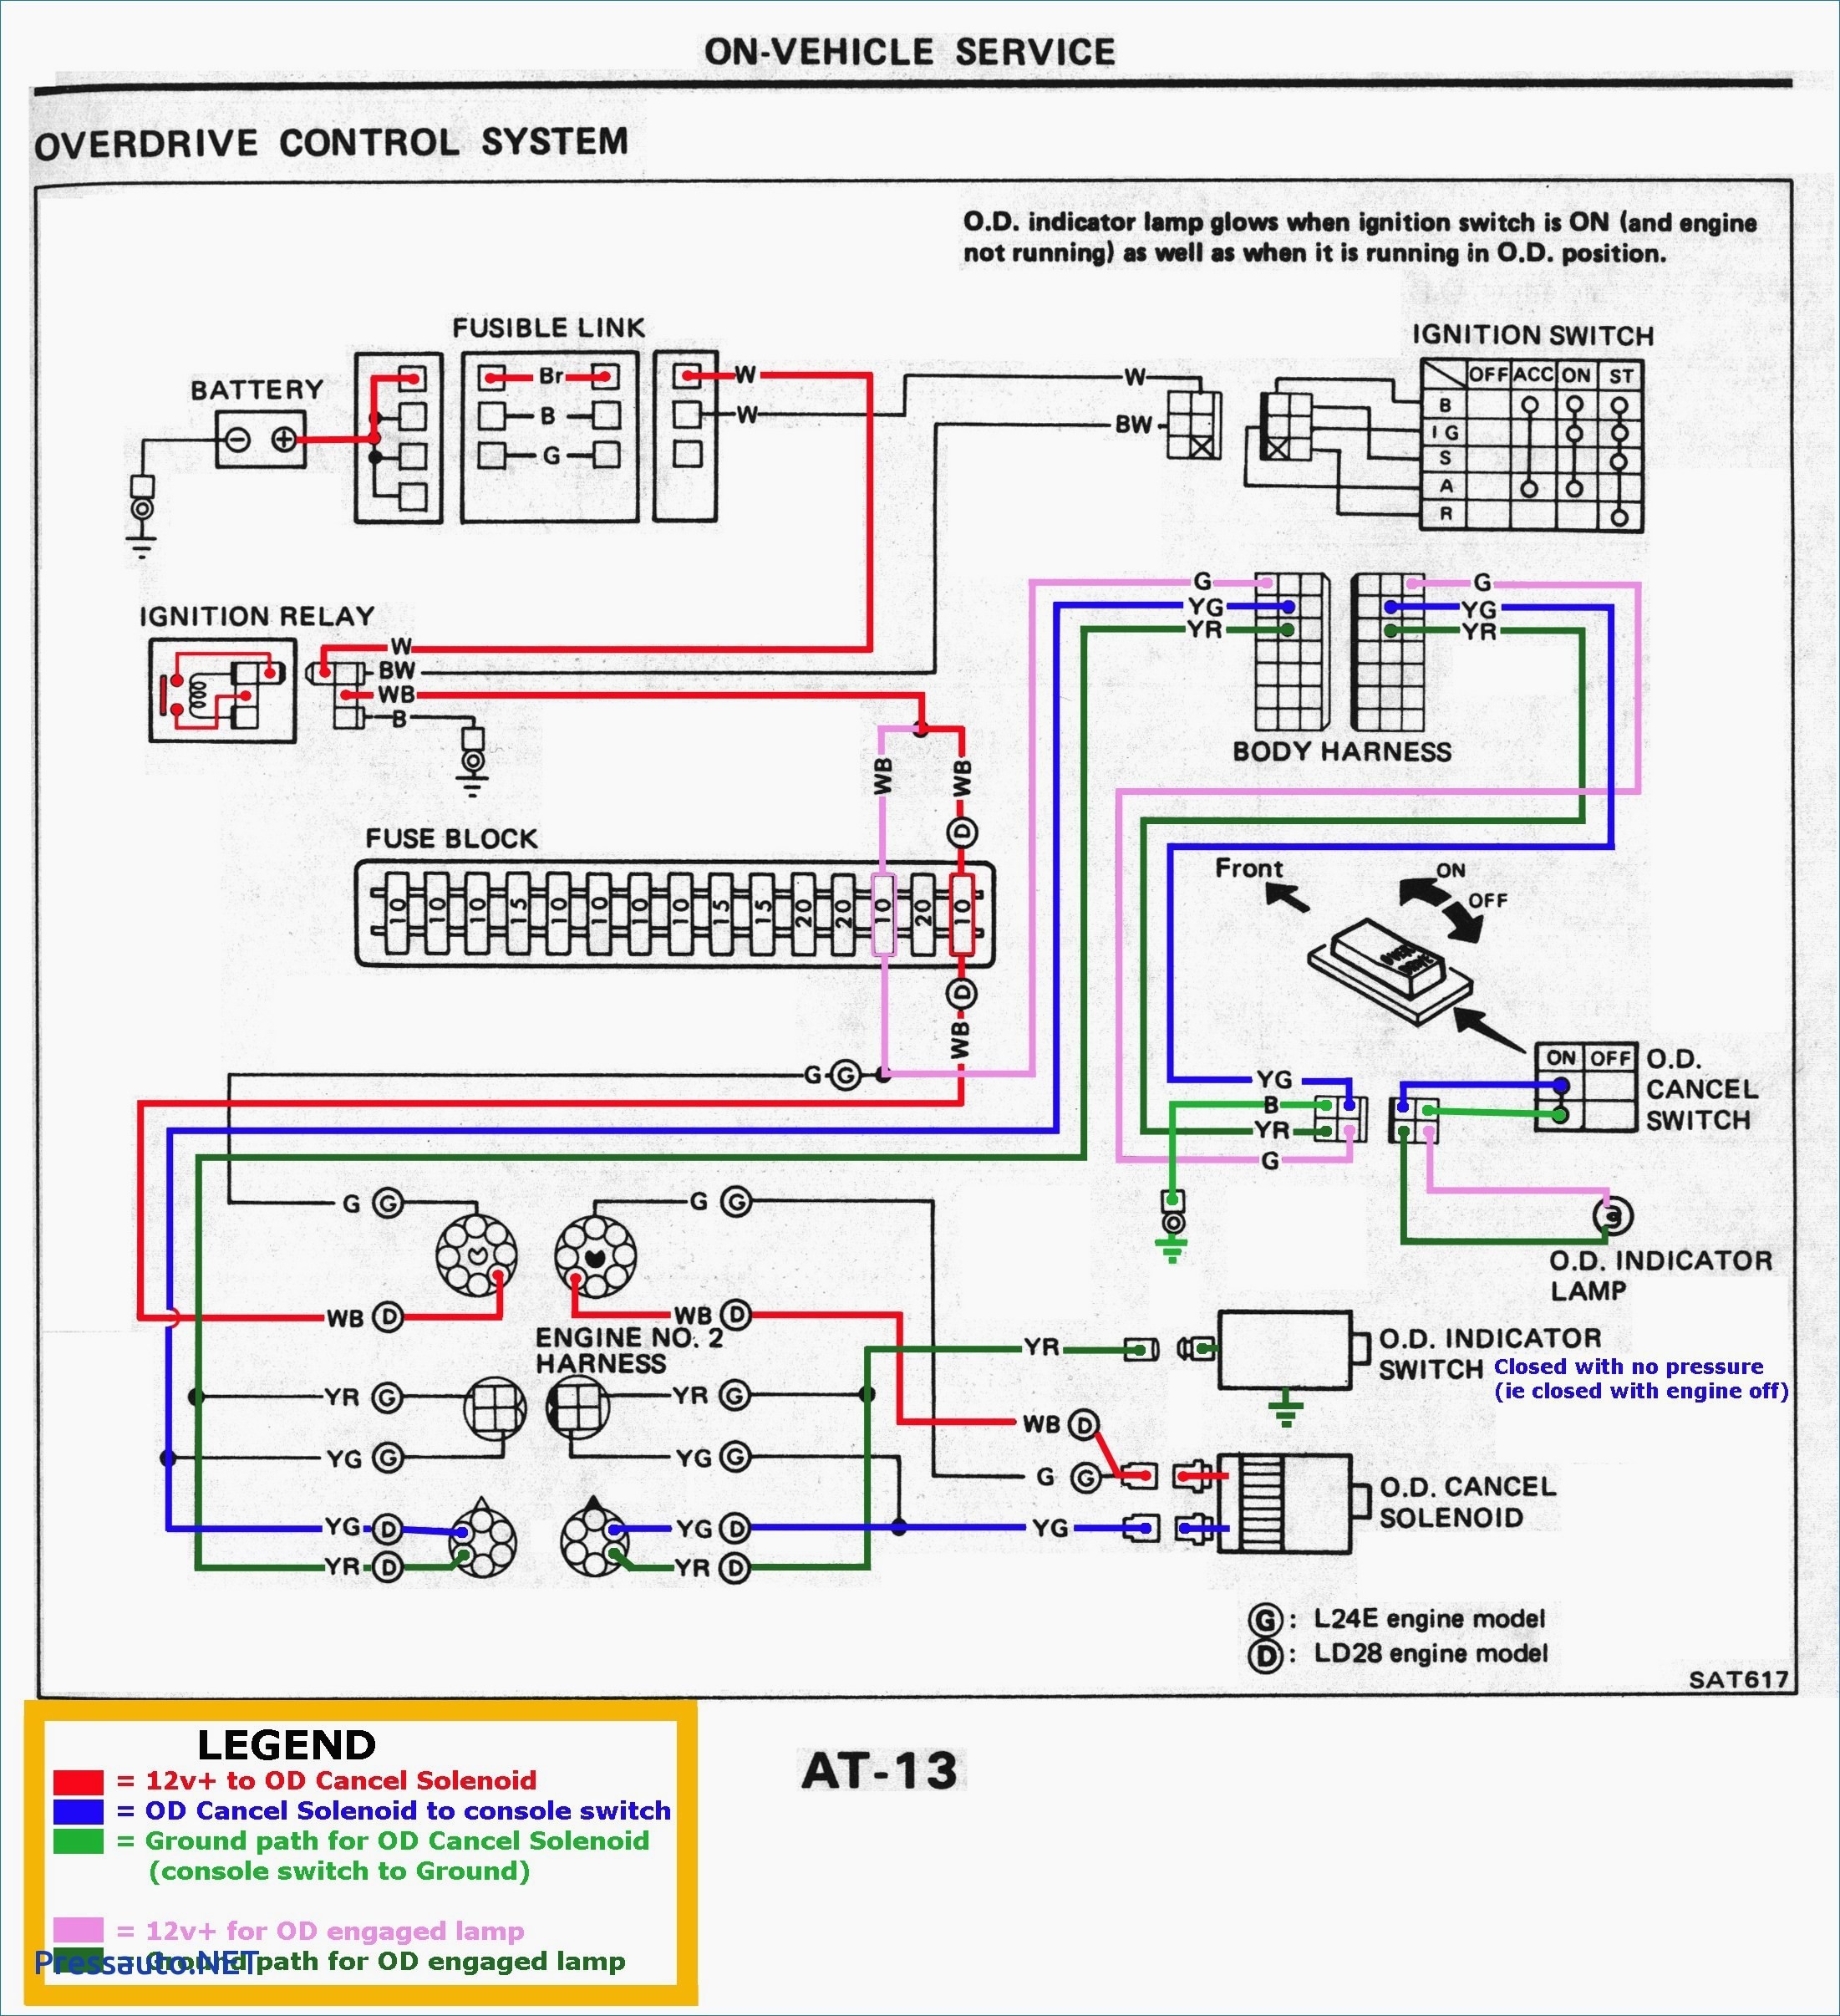 2001 Chevy Suburban Parts Diagram 08 Silverado Radio Wiring Diagram Mikulskilawoffices Of 2001 Chevy Suburban Parts Diagram